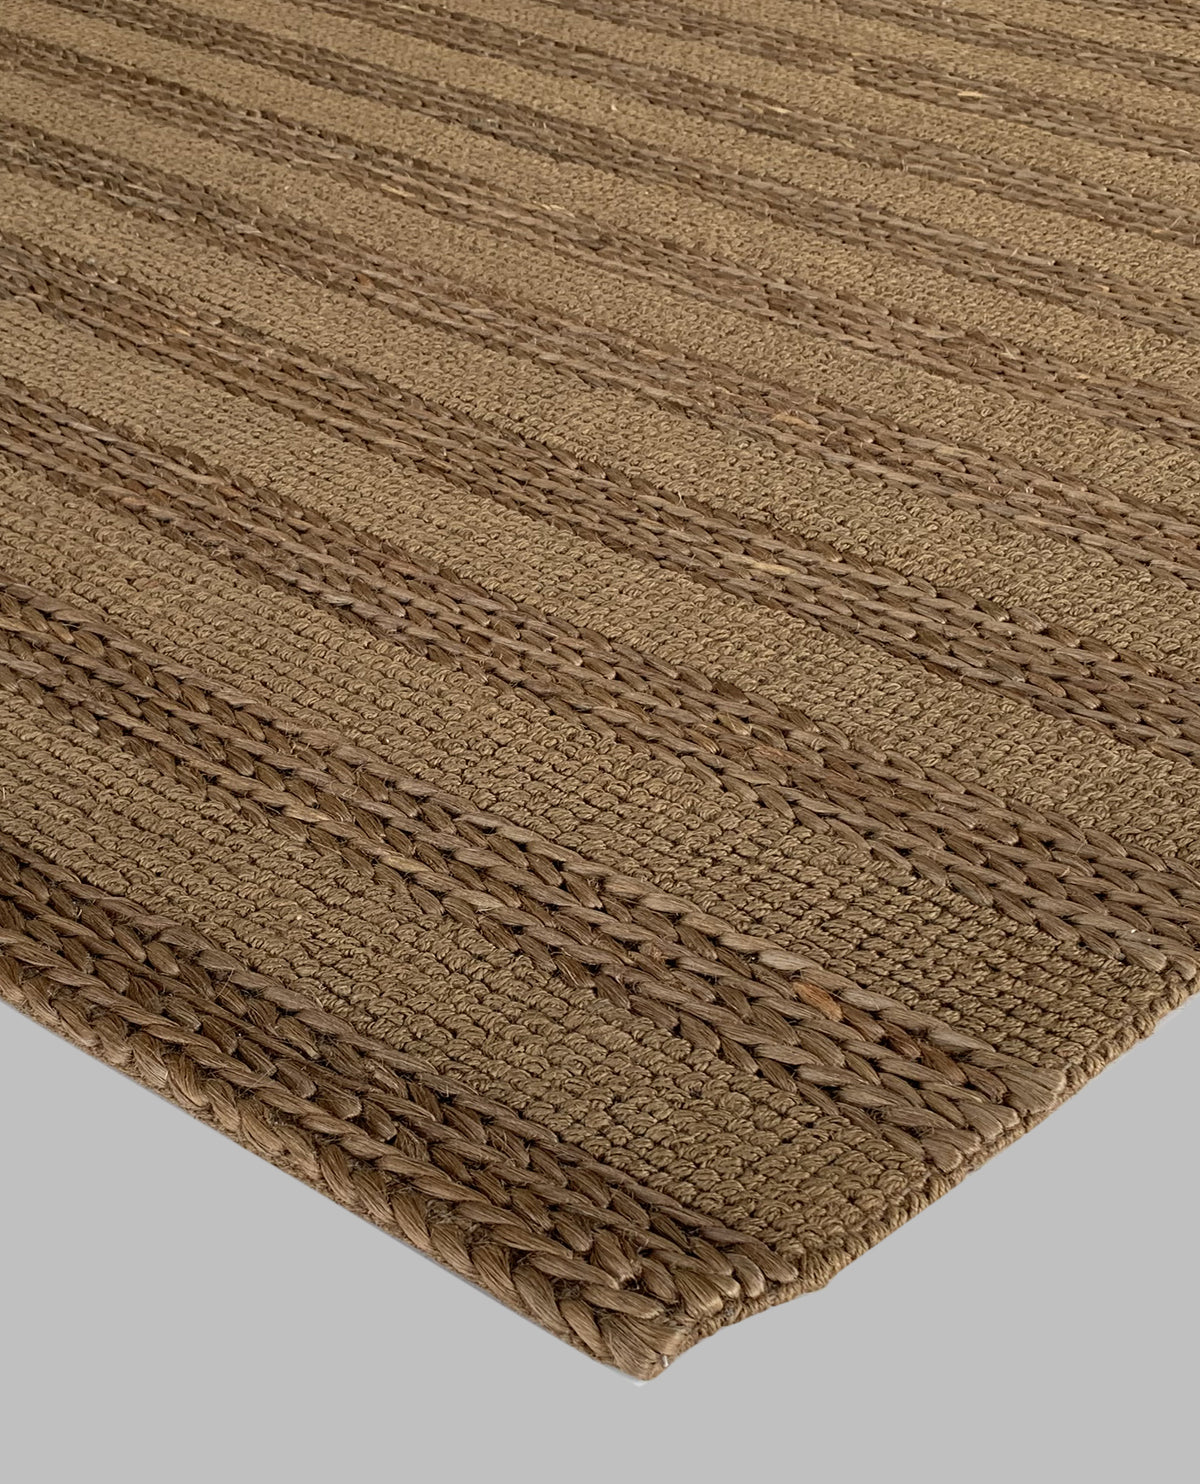 Rugslane Brown Jute Carpet 5.0ft X 8.0ft